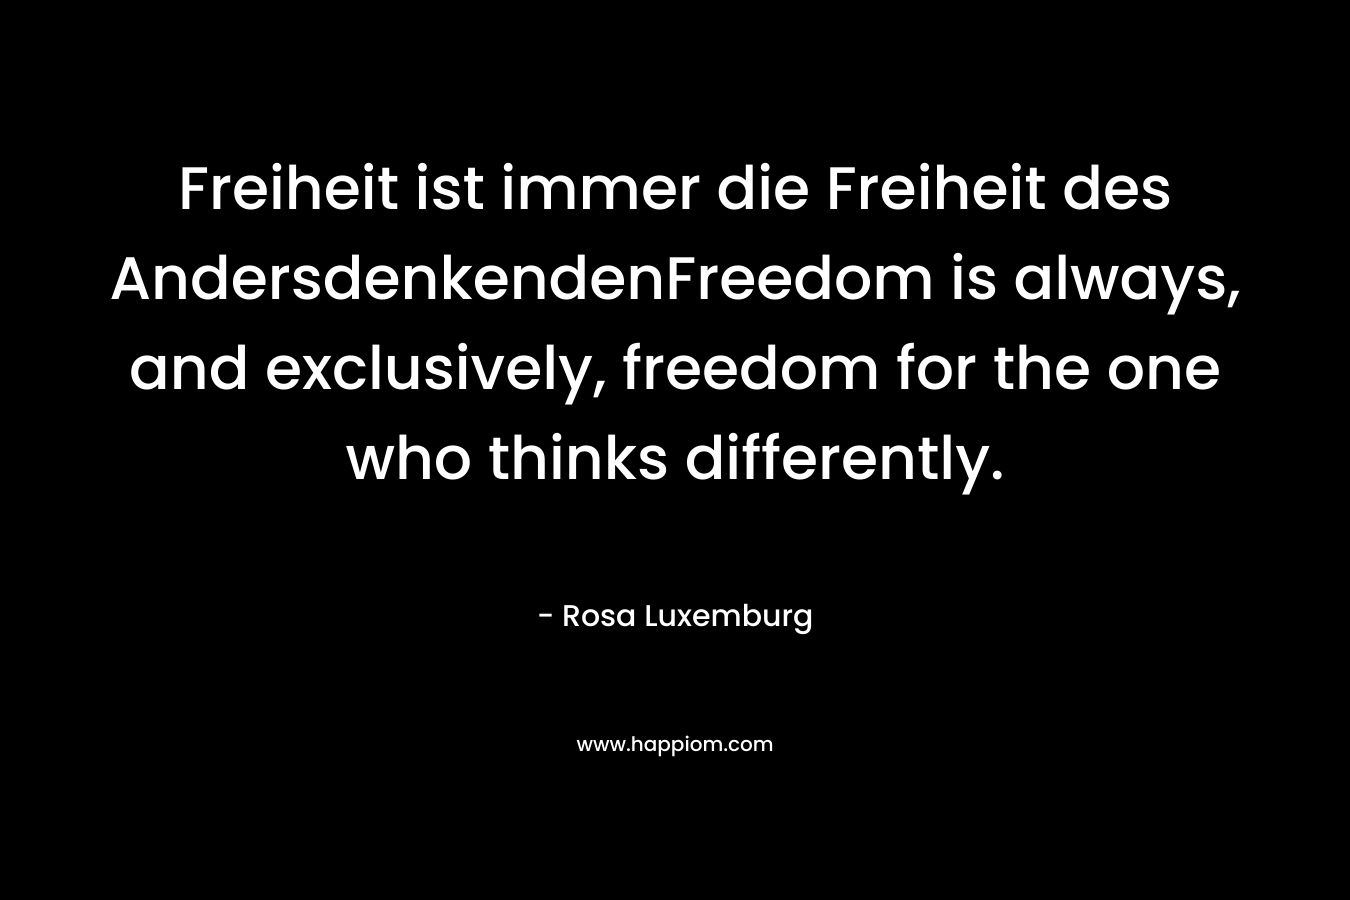 Freiheit ist immer die Freiheit des AndersdenkendenFreedom is always, and exclusively, freedom for the one who thinks differently.